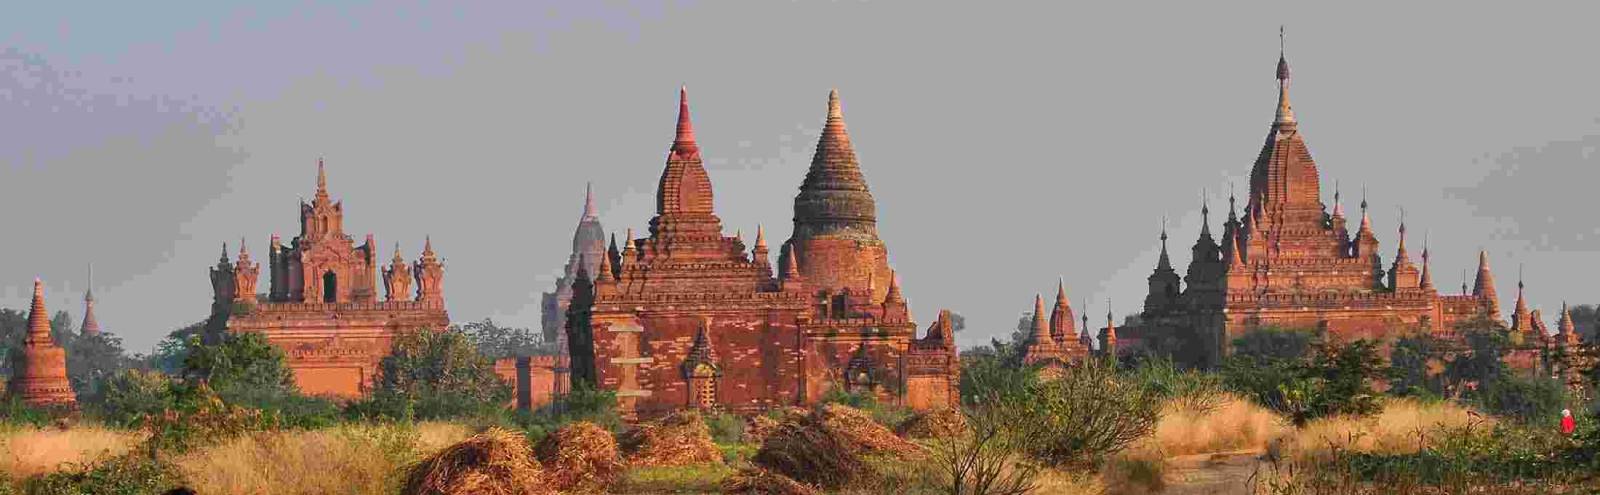 Myanmar Adventure Tours